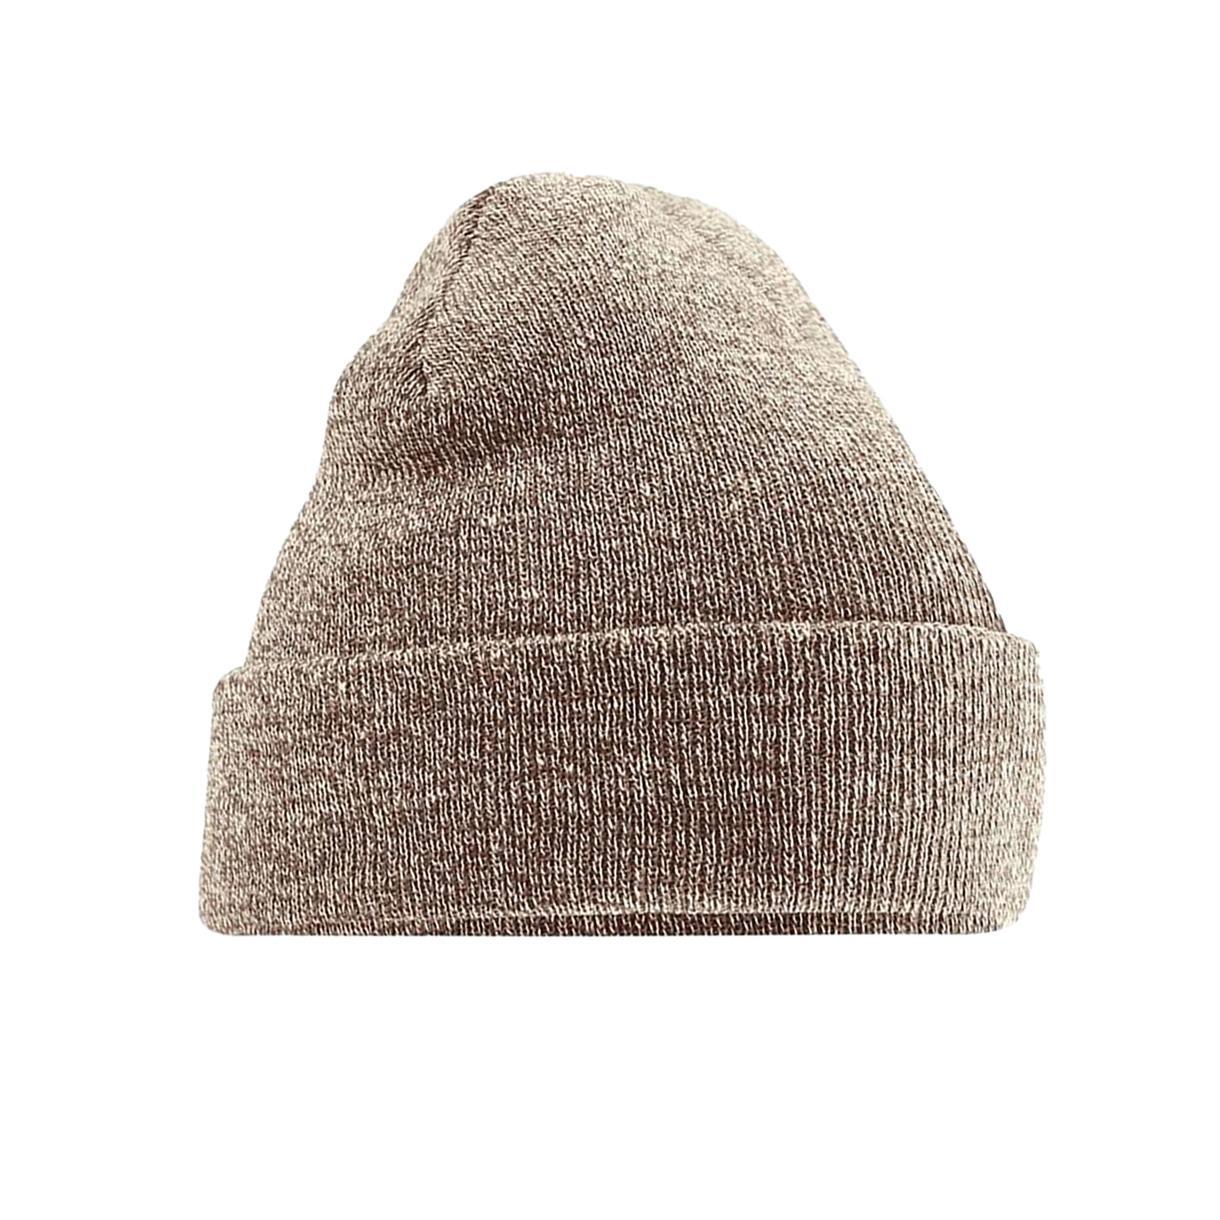 Beechfield Soft Feel Knitted Winter Hat (Heather Oatmeal) (One Size)